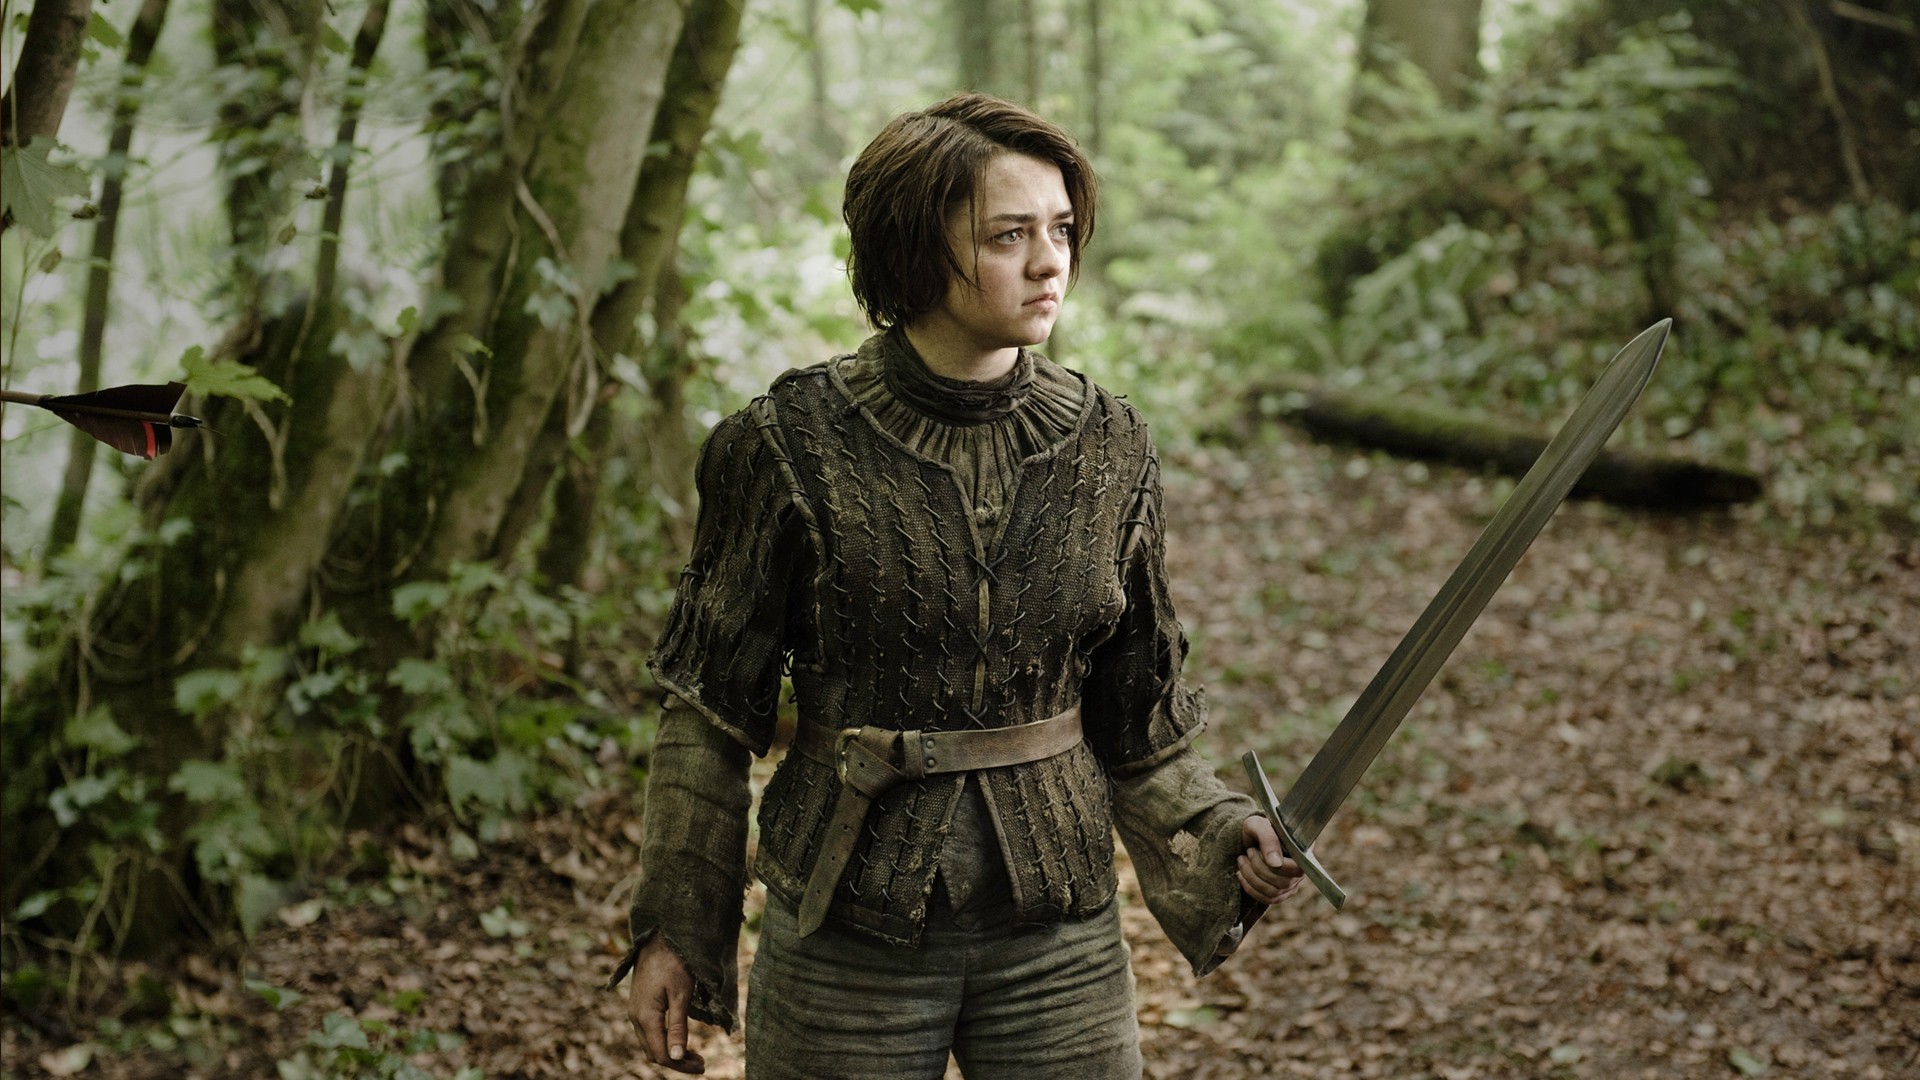 People 1920x1080 Arya Stark Game of Thrones Maisie Williams actress women with swords sword fantasy girl TV series weapon brunette women